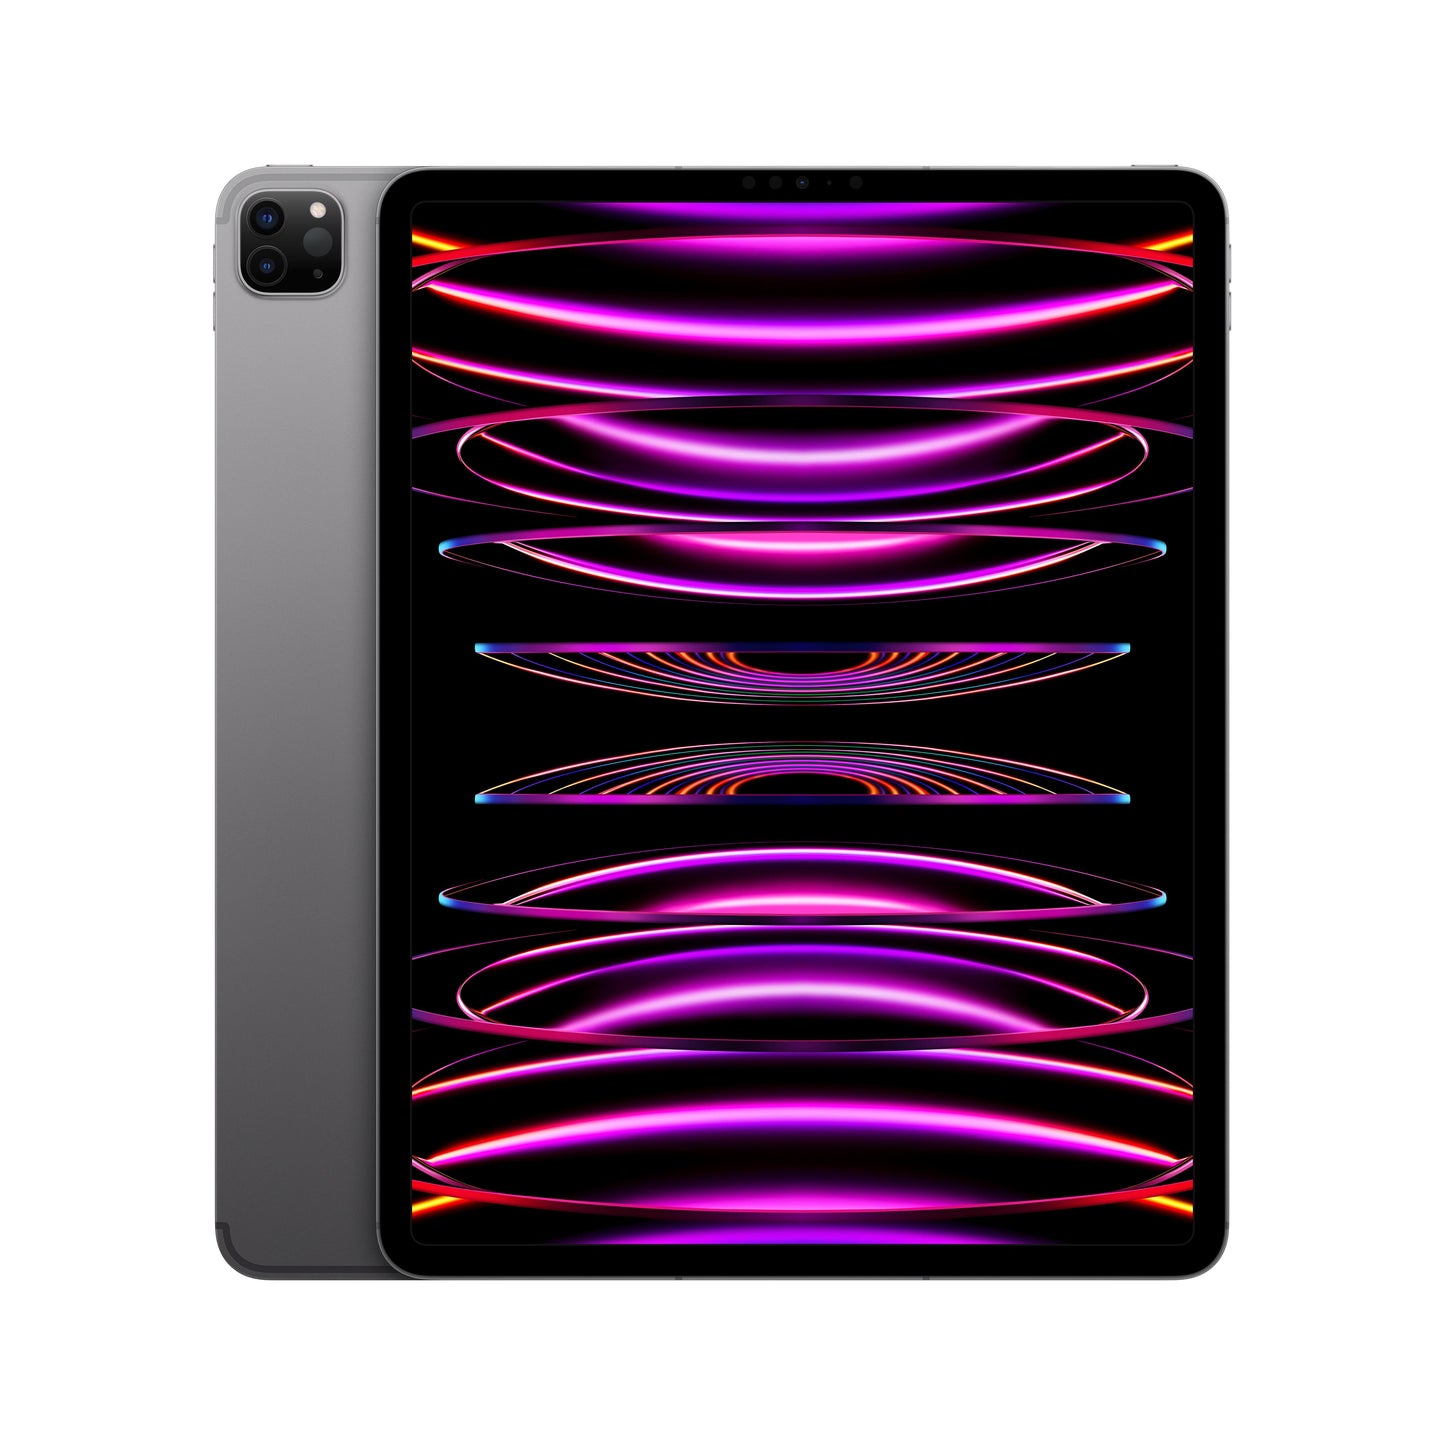 2022 iPad Pro مقاس 12.9 إنش Wi-Fi 128GB + شريحة  - رمادي (الجيل السادس)